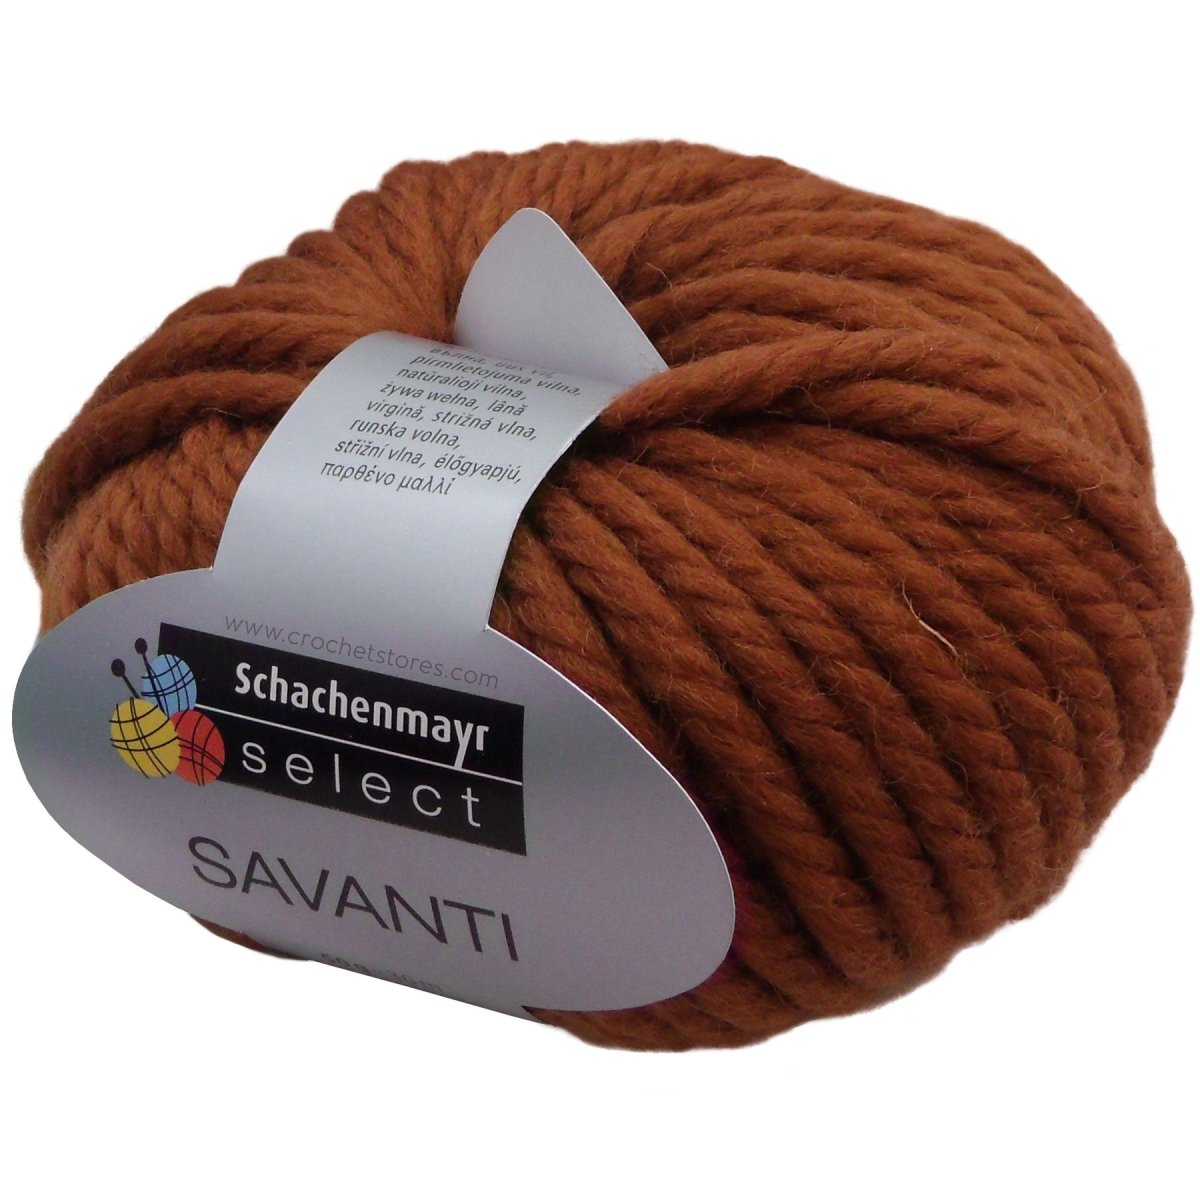 SAVANTI - Crochetstores9811771-47234082700488278